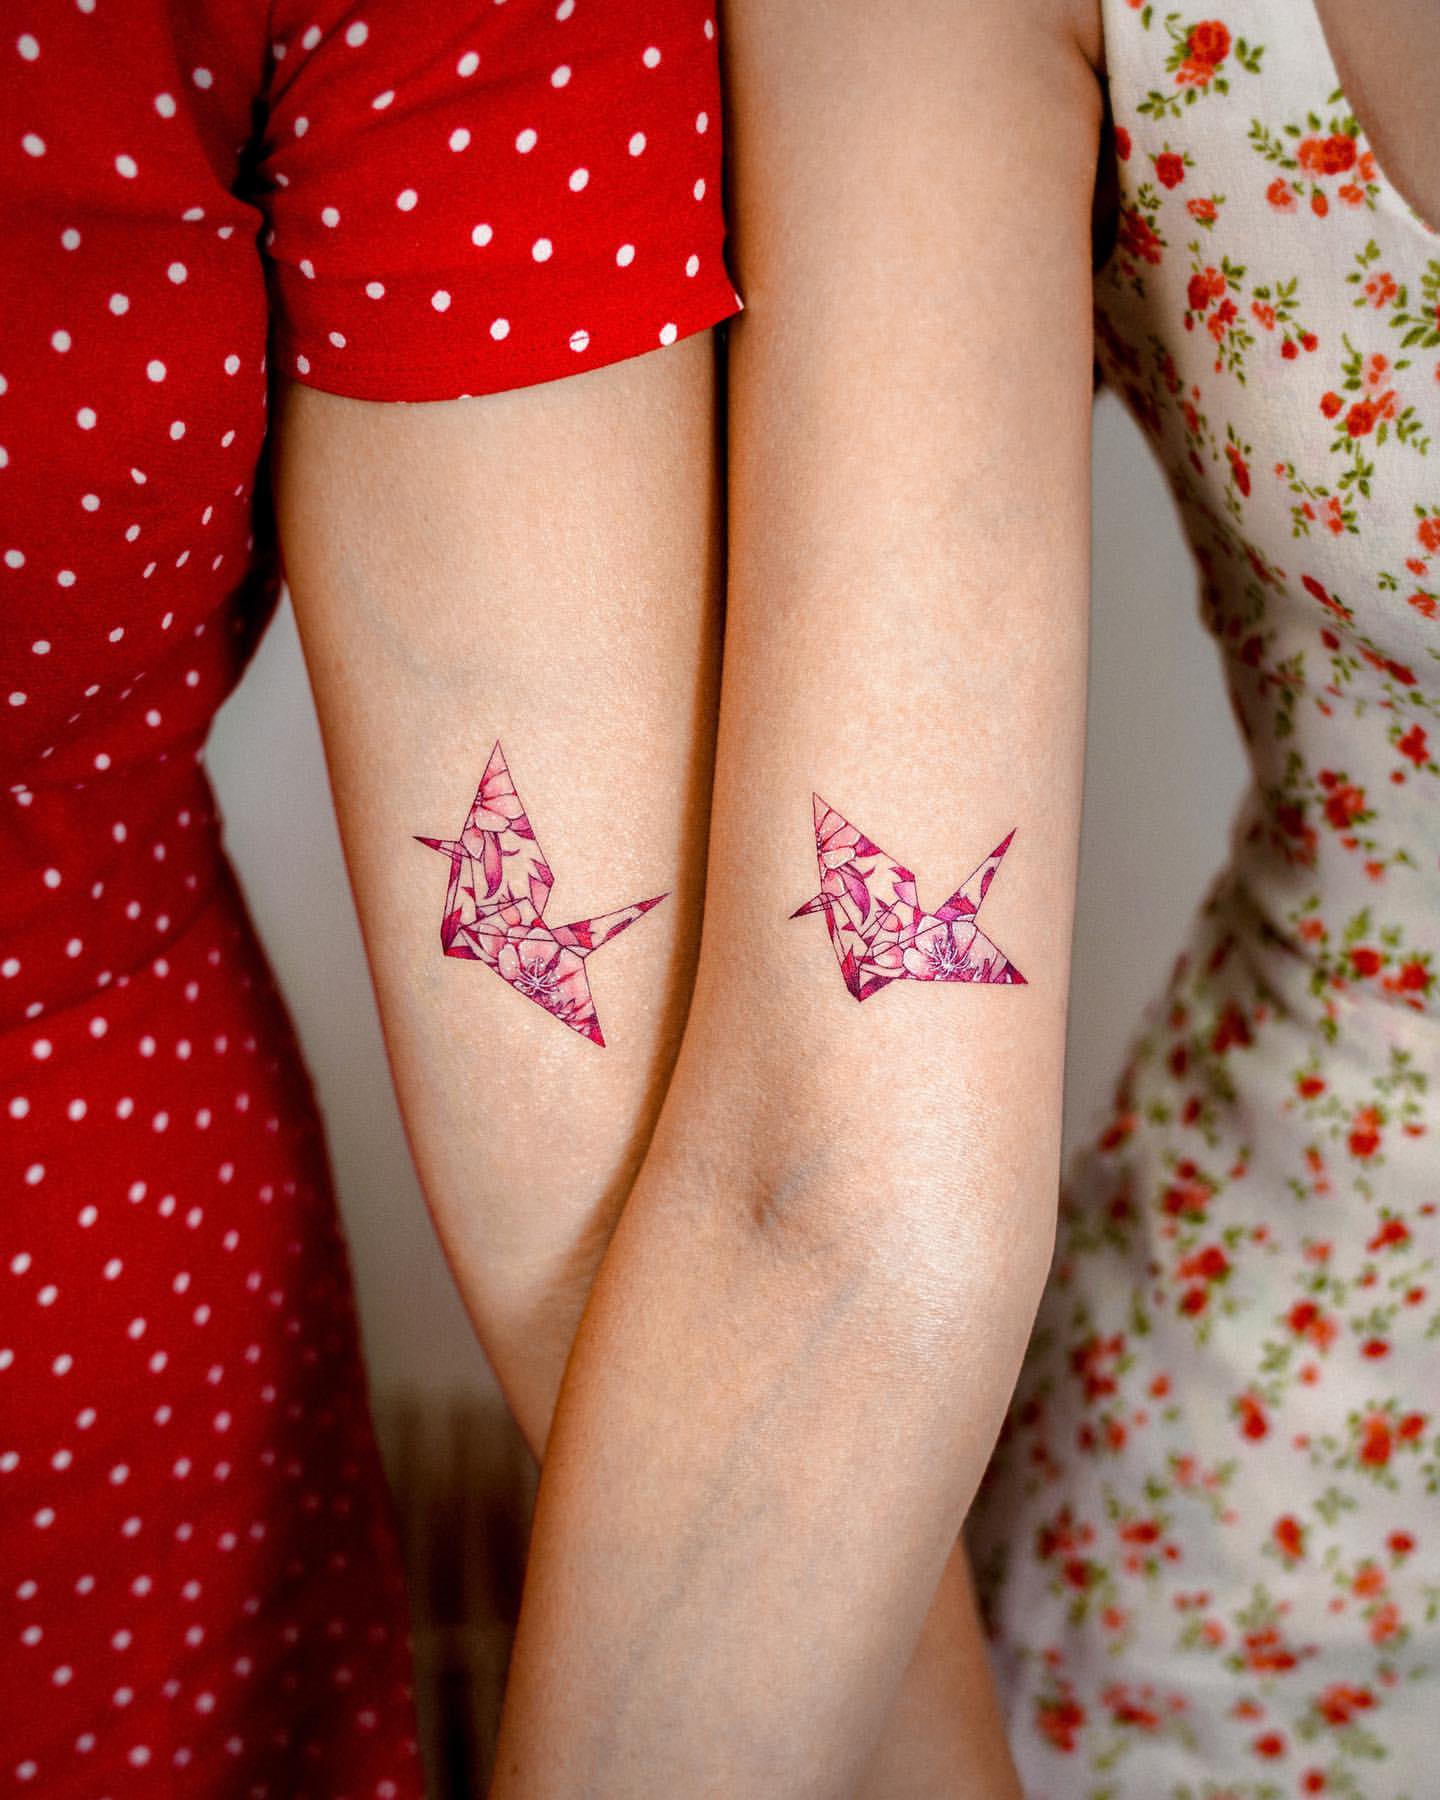 Cute Tattoo Ideas for Women 18